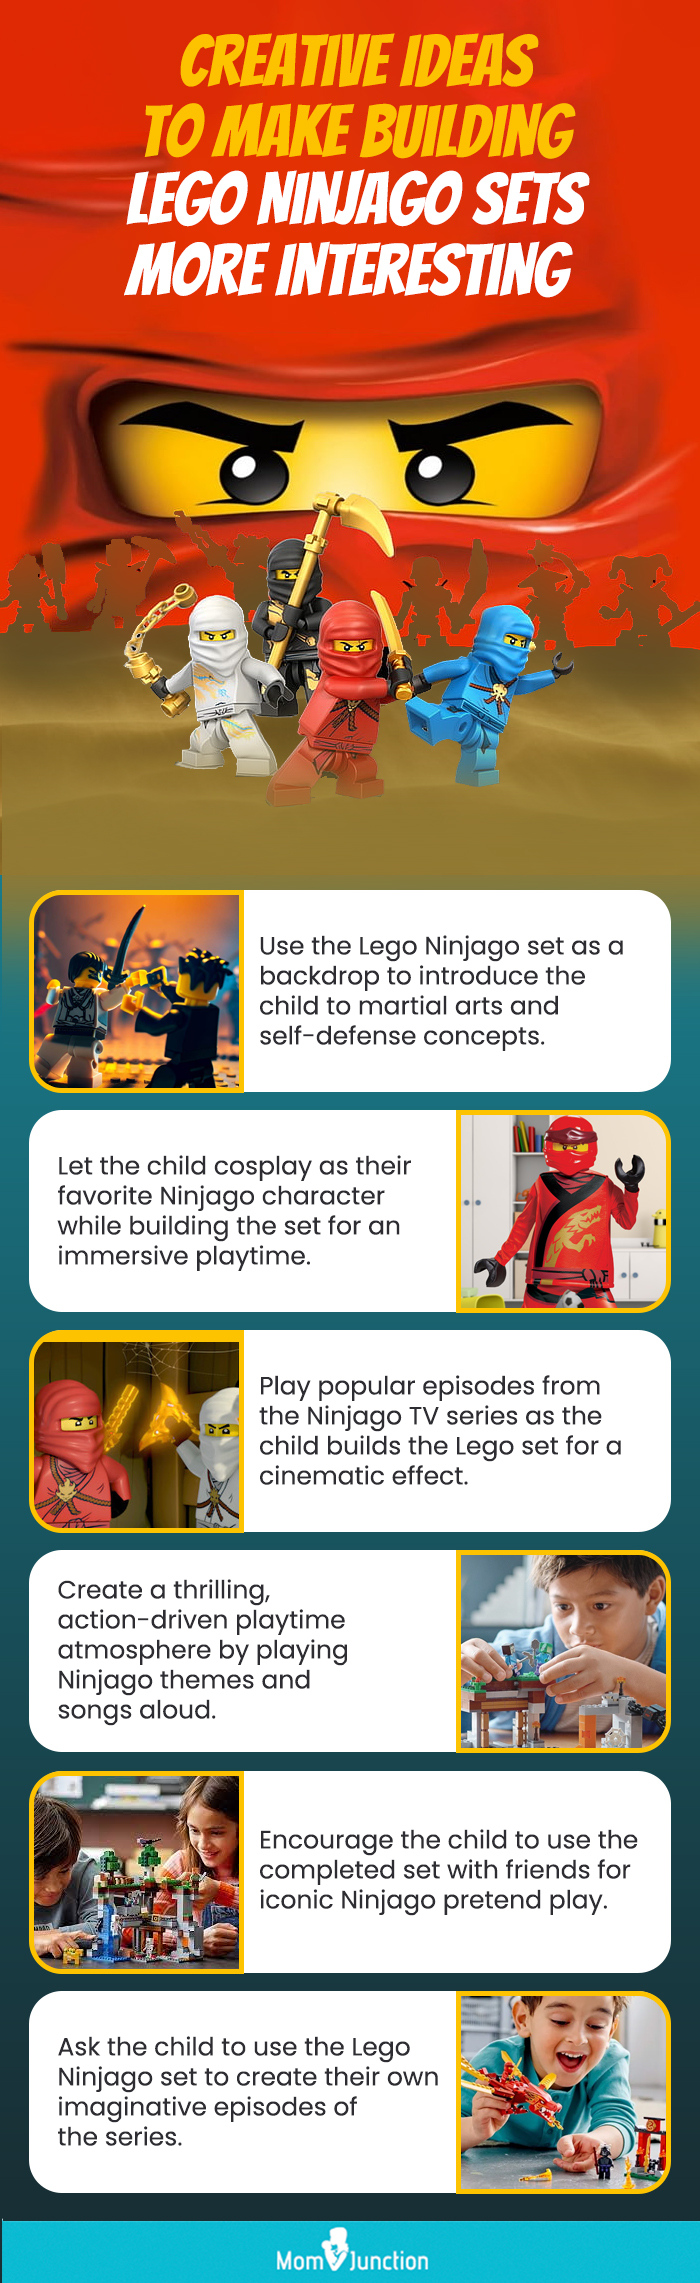 Creative Ideas To Make Building Lego Ninjago Sets More Interesting (infographic)